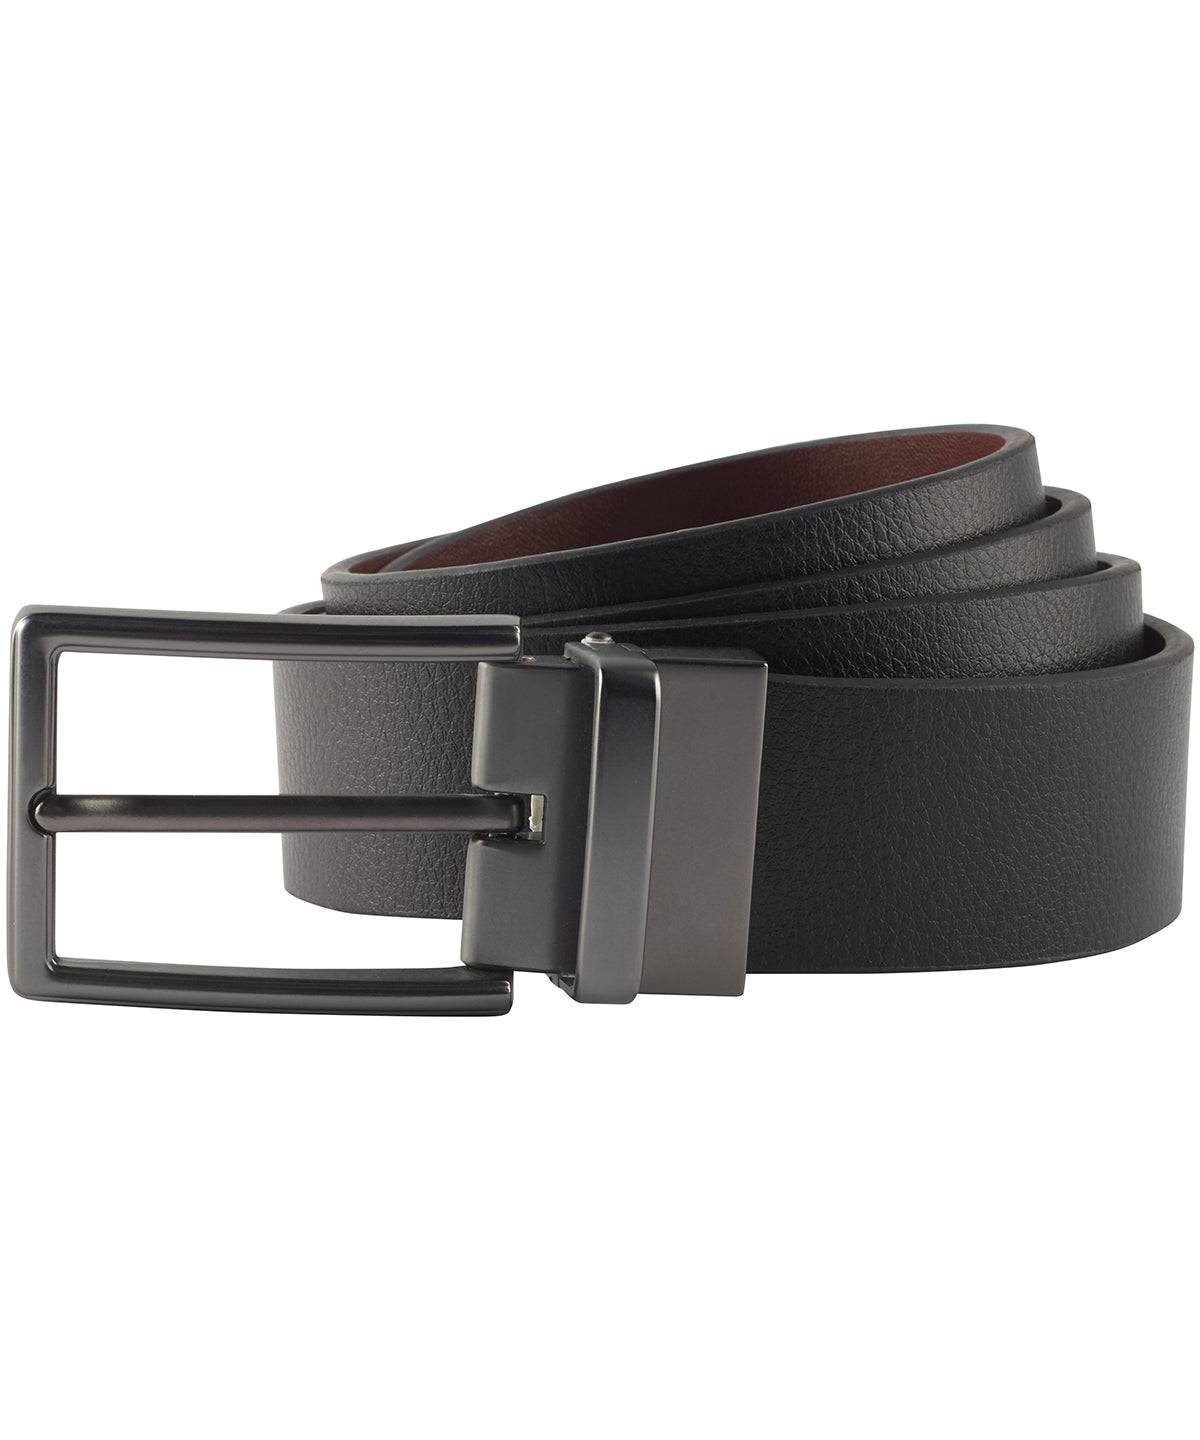 Black/Brown - Men's two-way leather belt